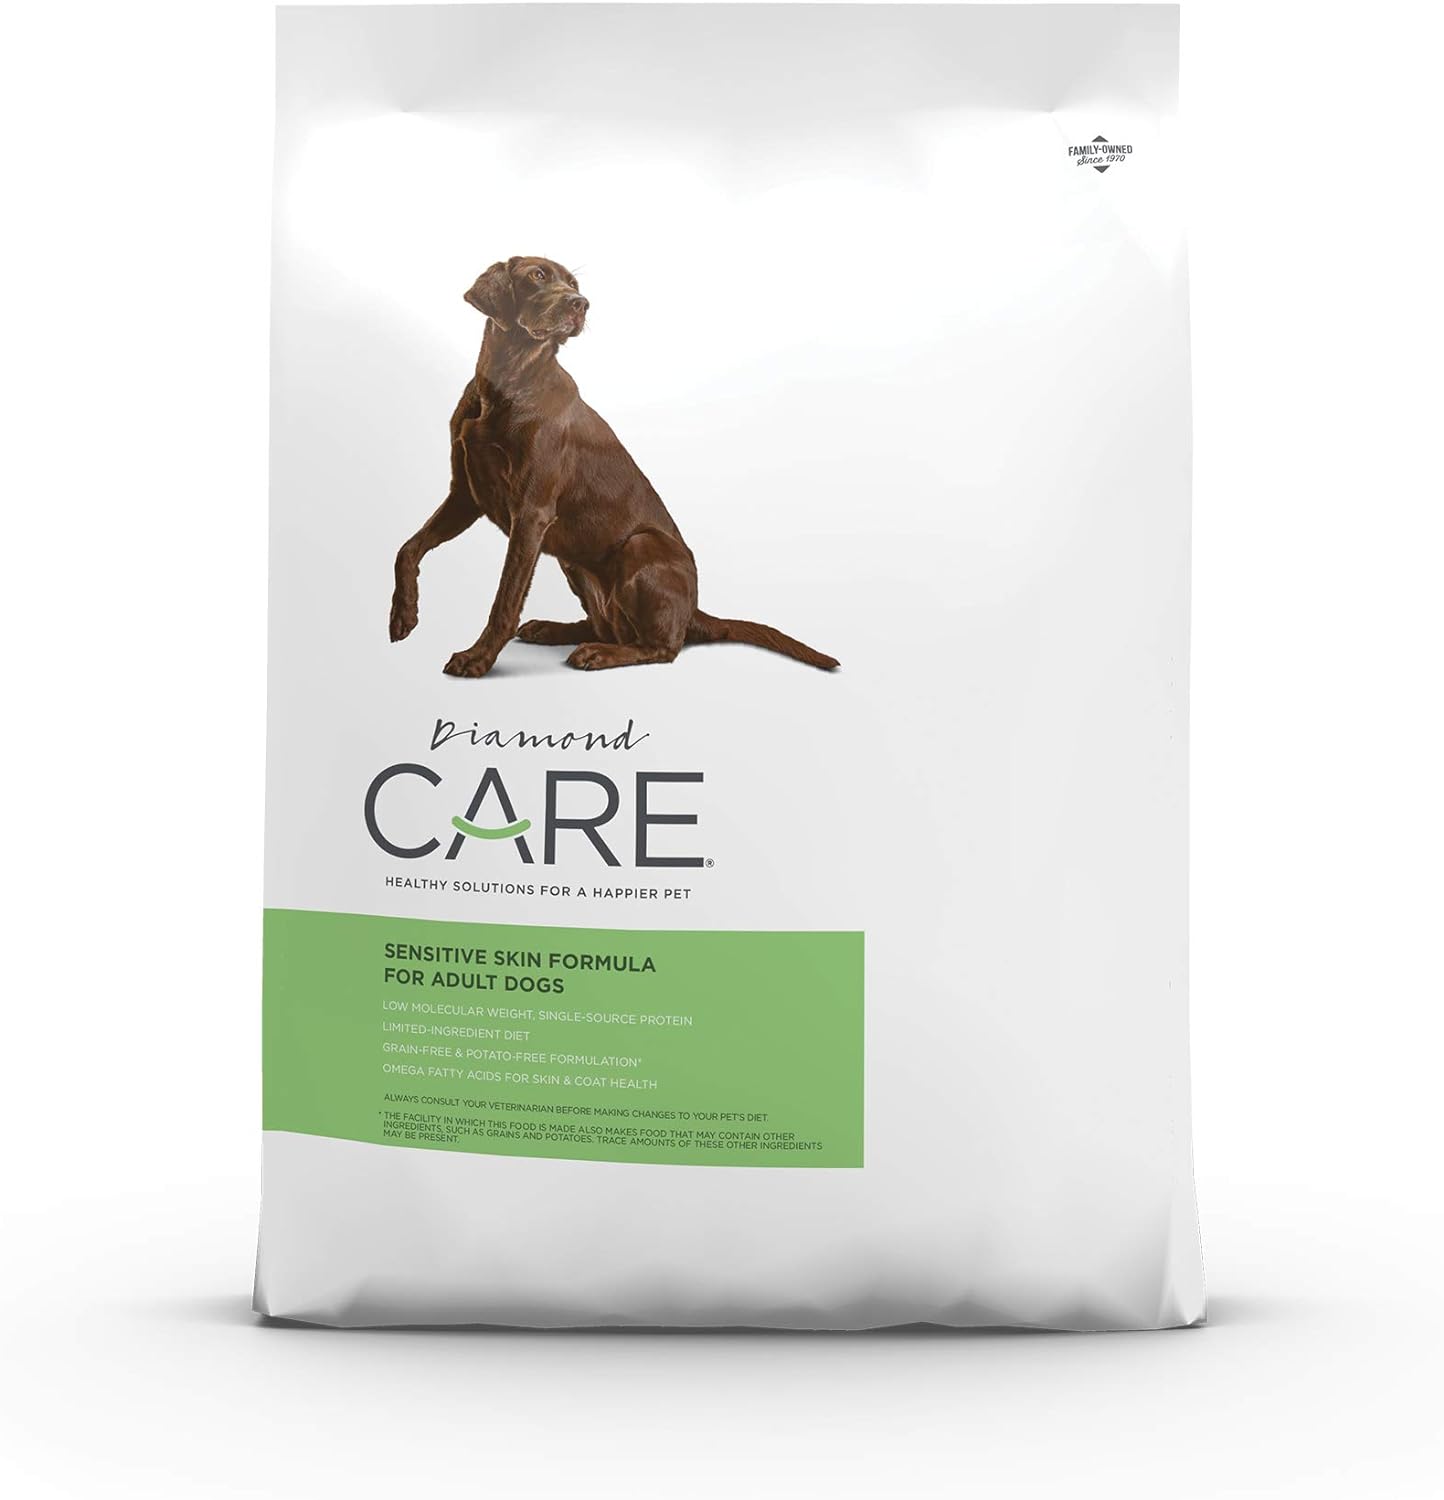 Diamond Care Sensitive Skin Formula for Adult Dogs Dry Dog Food – Gallery Image 1